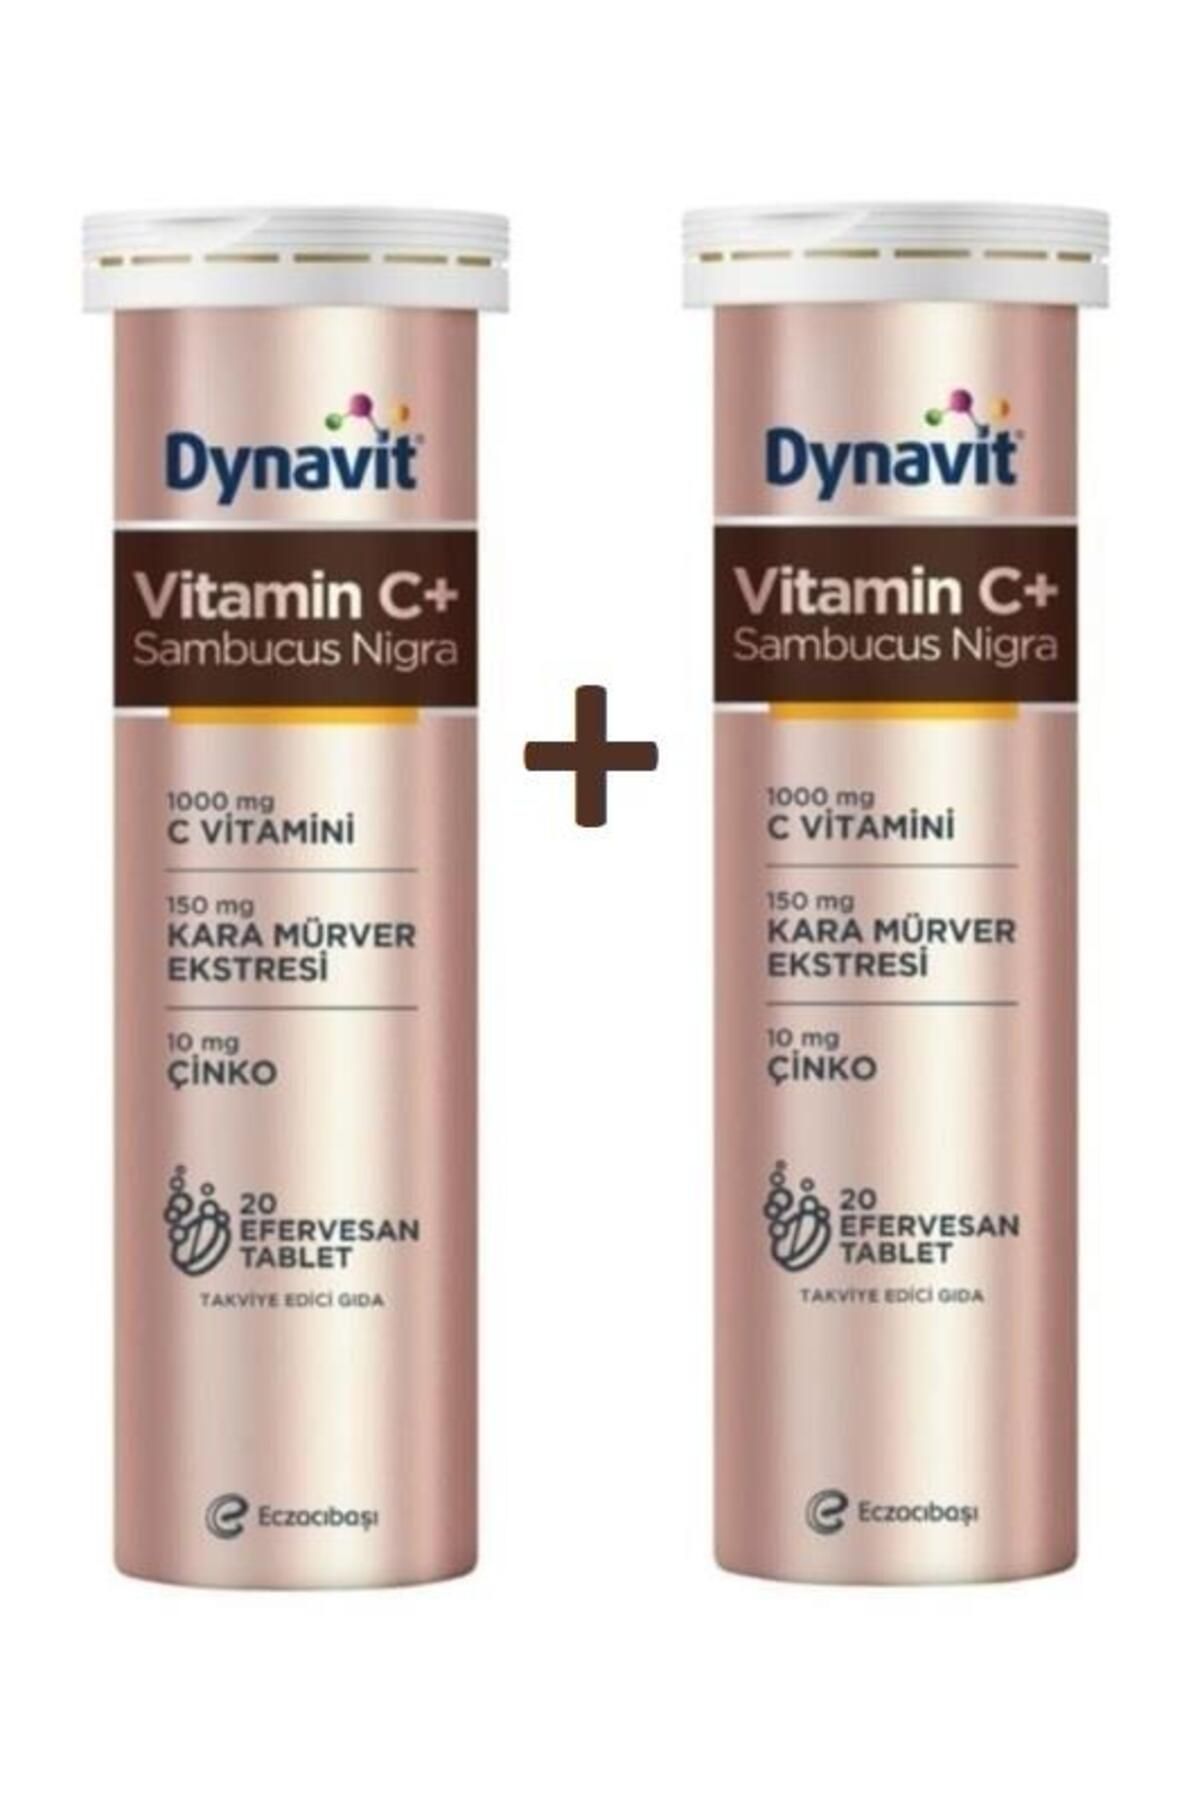 Eczacıbaşı Dynavit Vitamin C+ Sambucus Nigra 20 Efervesan Tablet 2 Adet